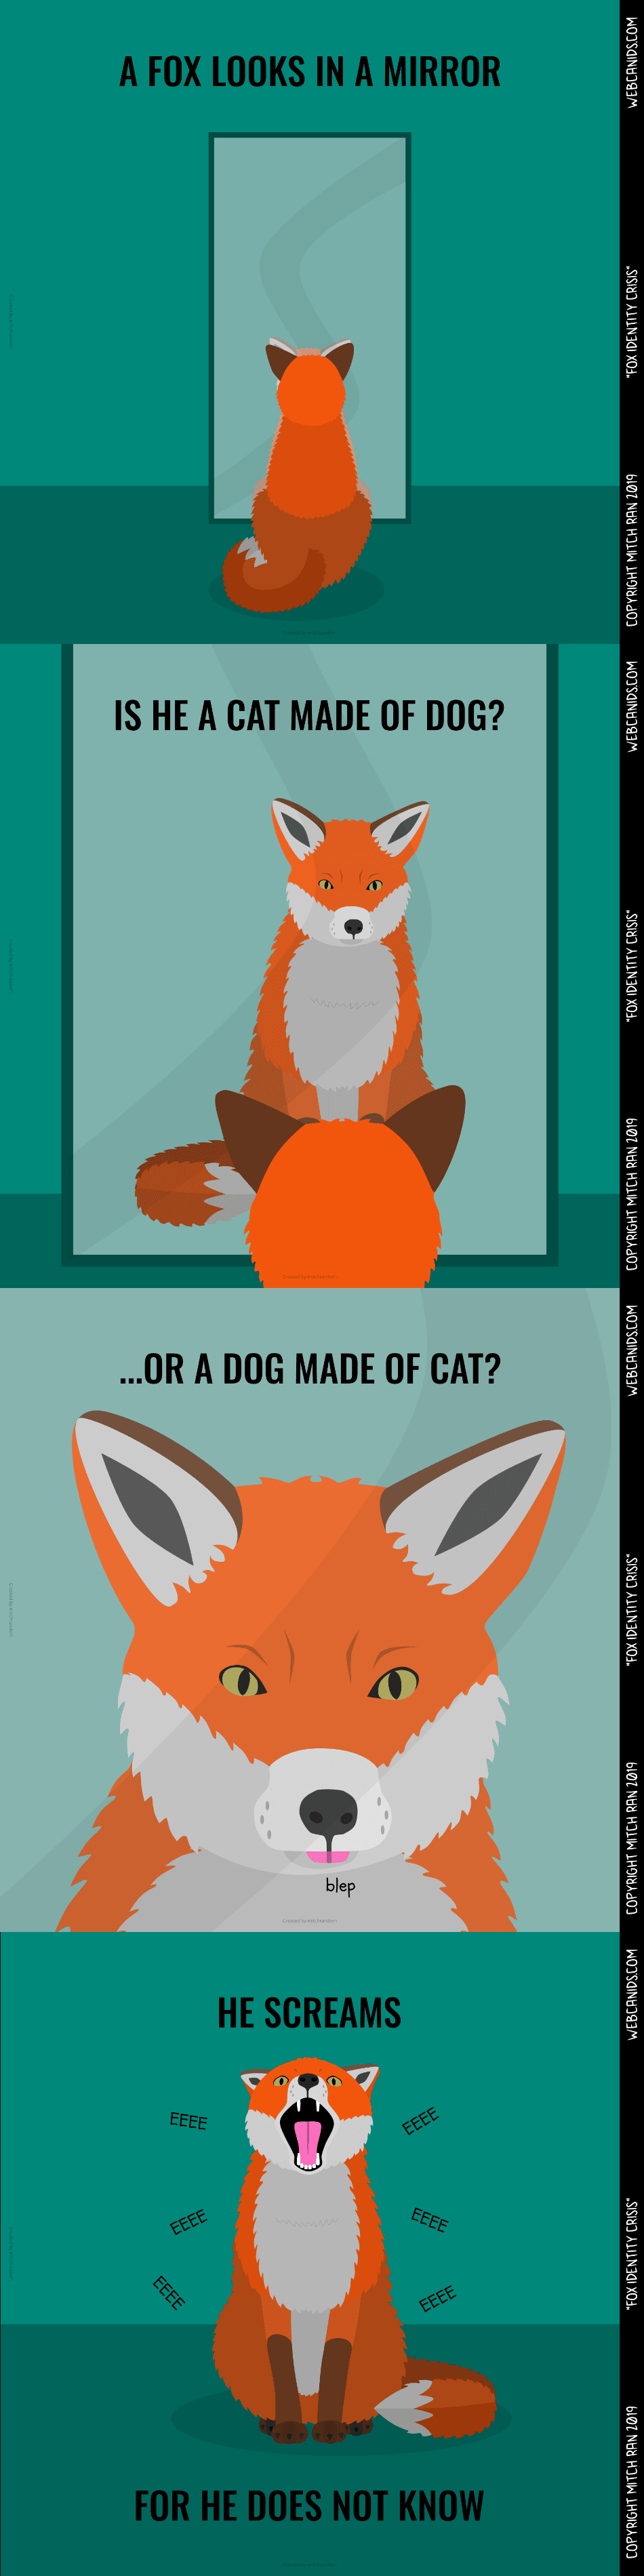 Fox Identity Crisis